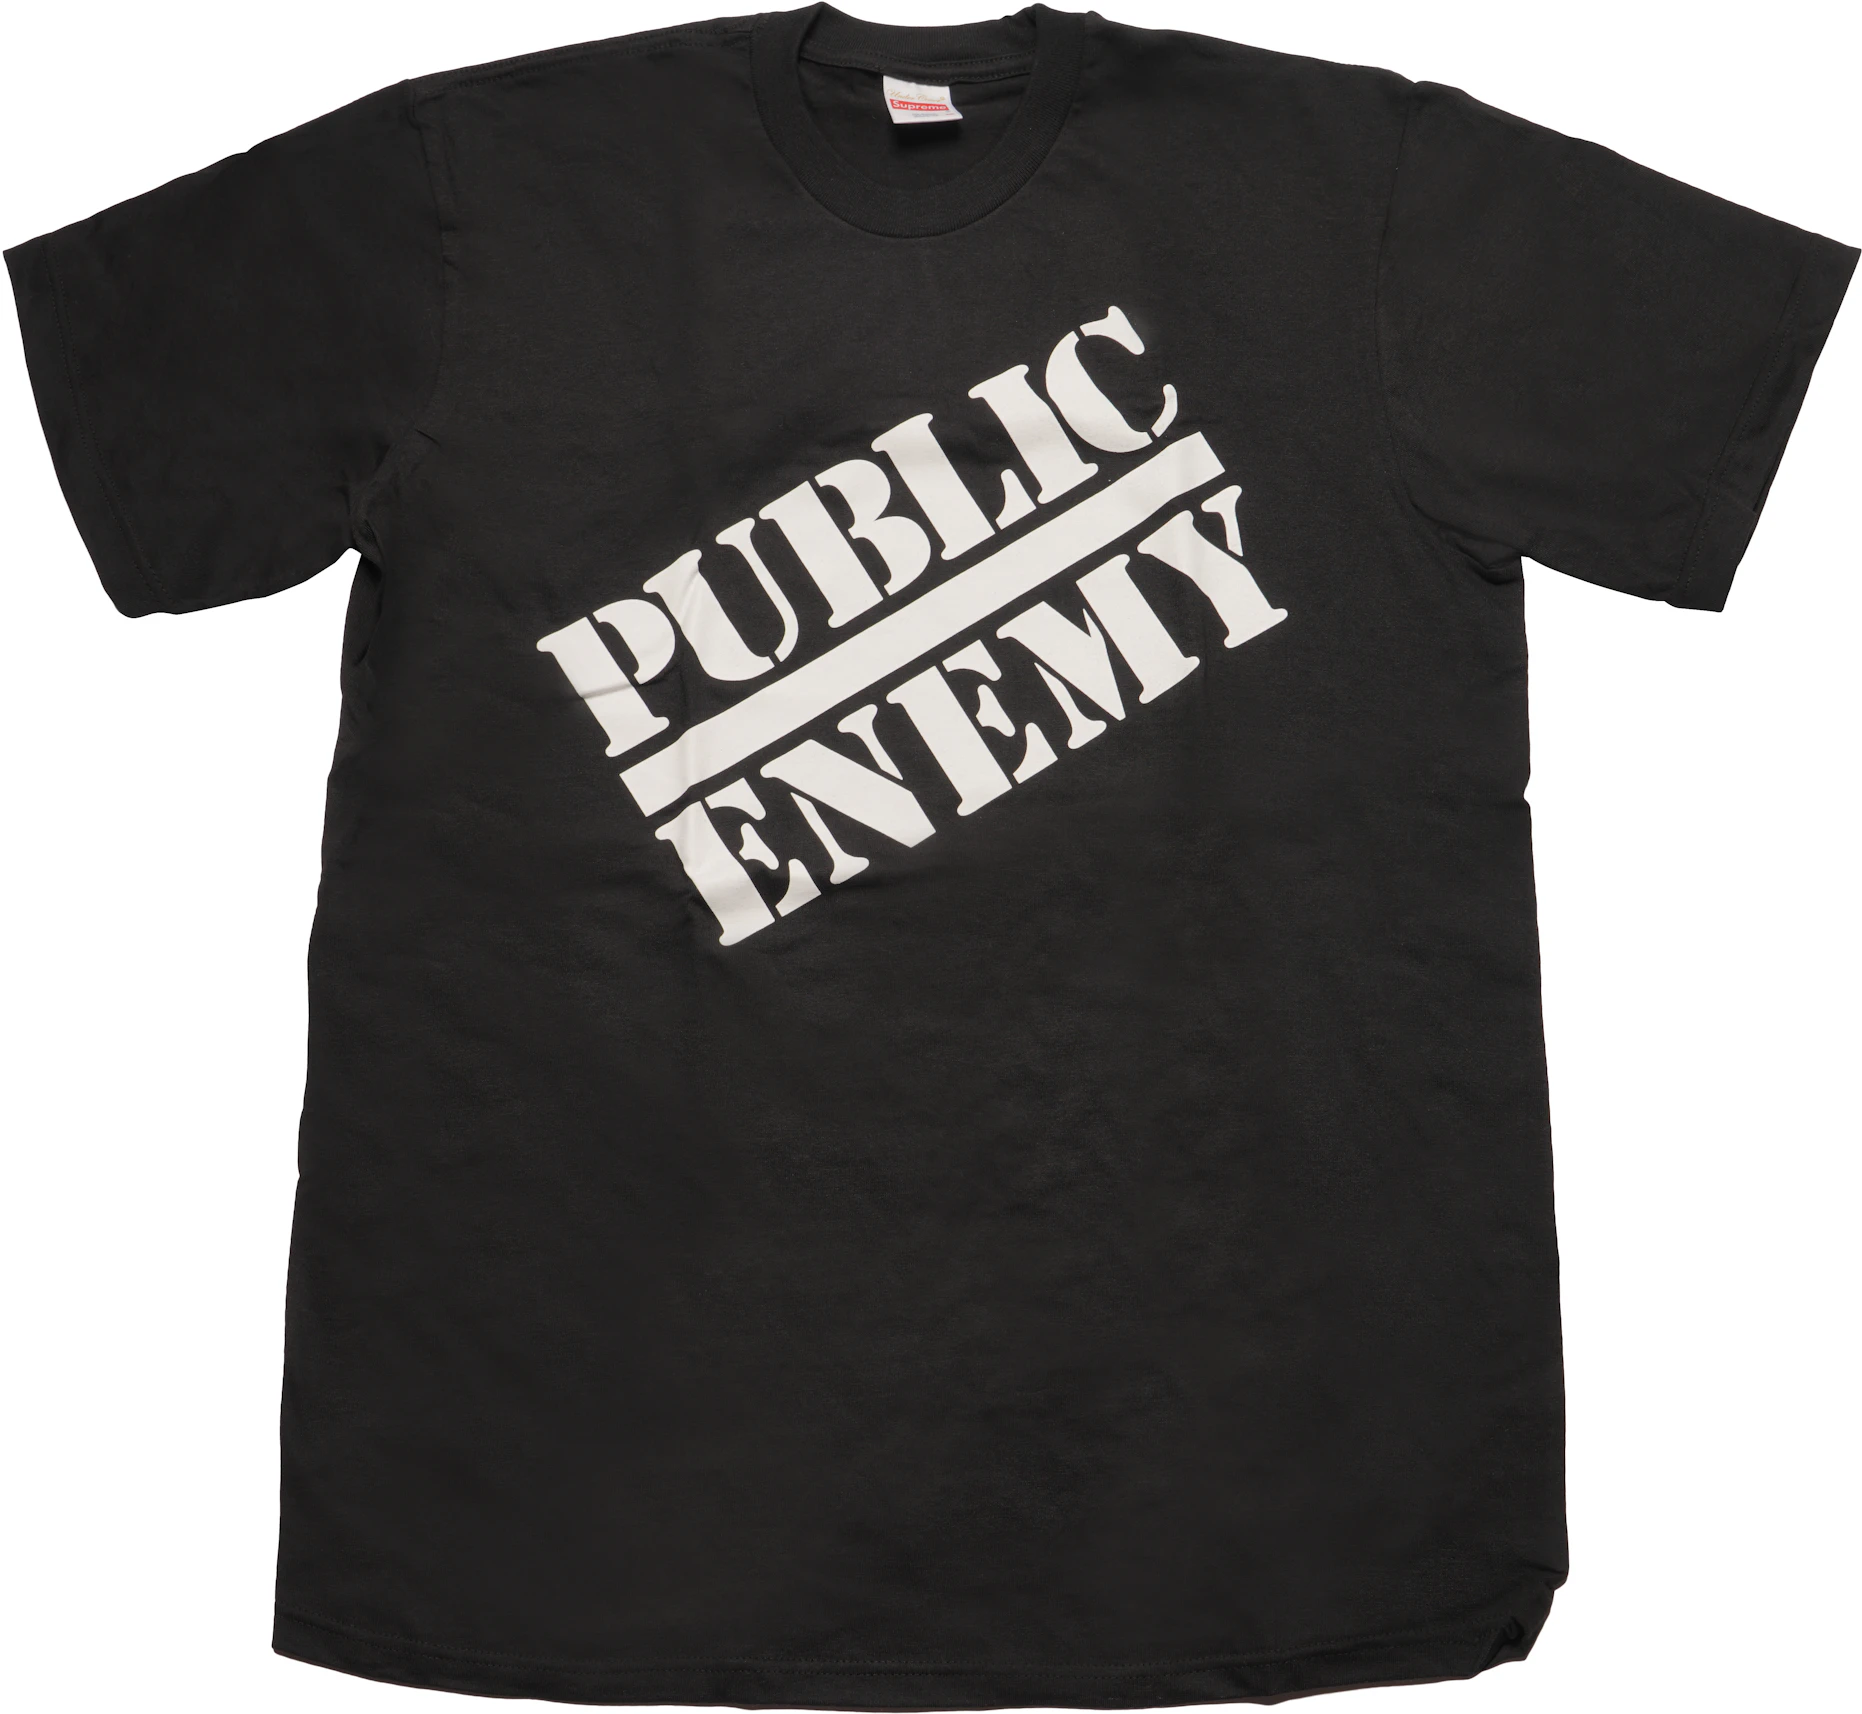 Public Enemy X Supreme | art-kk.com